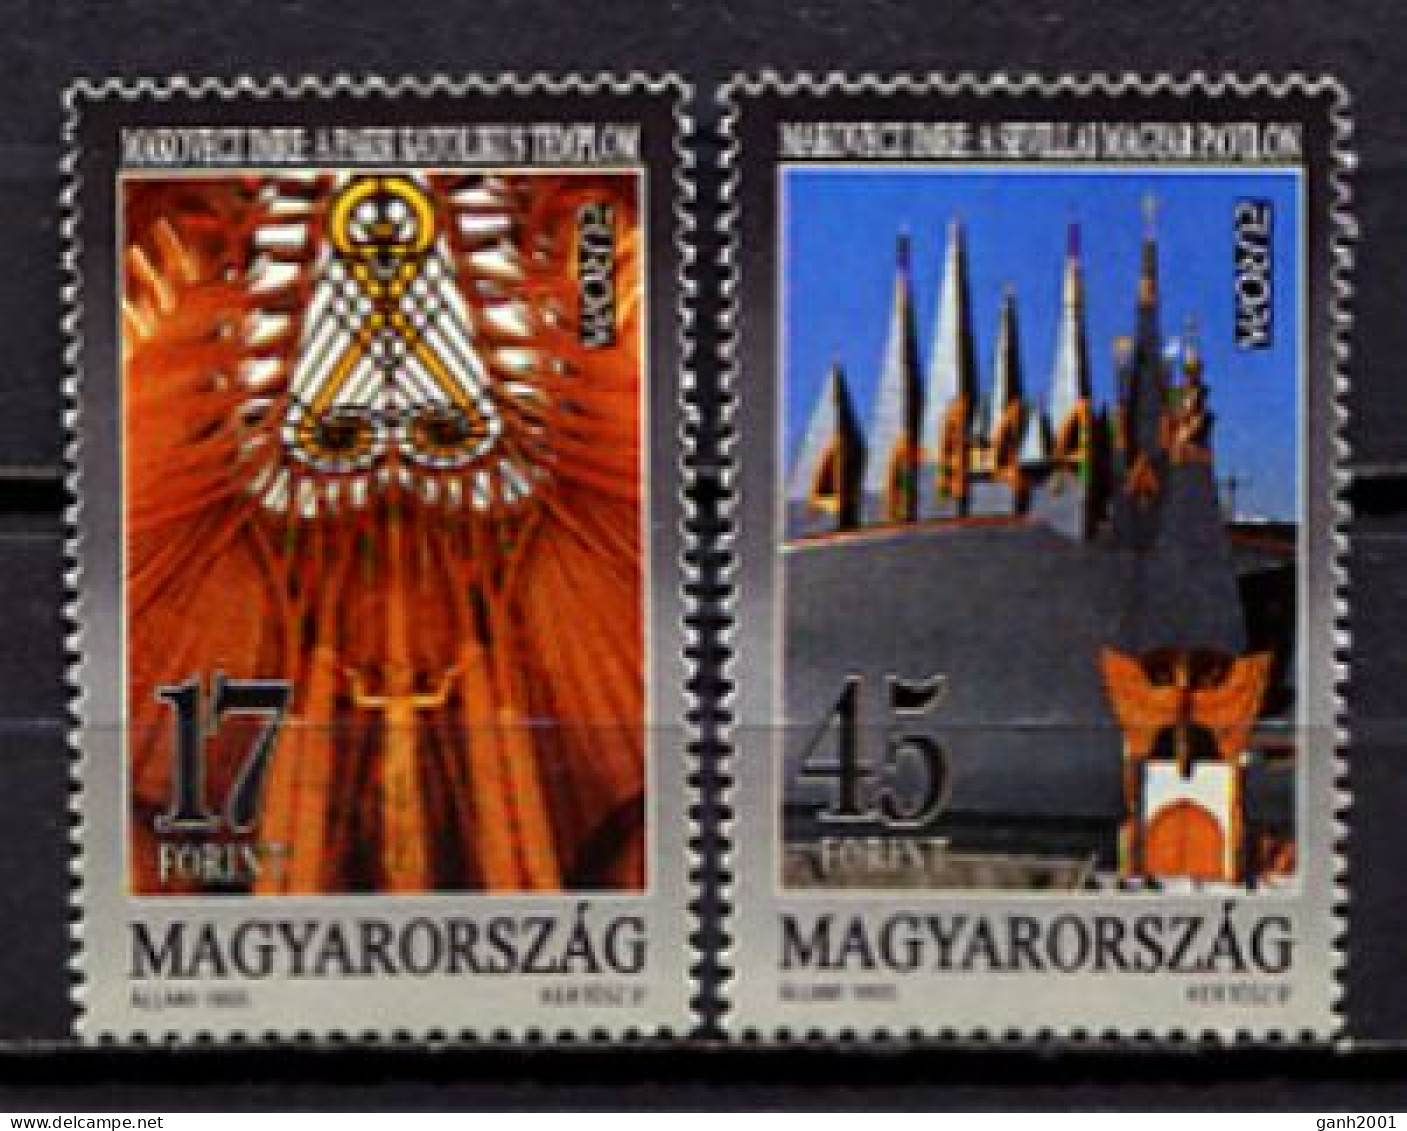 Hungary 1993 Hungría / Europa CEPT Architecture MNH Arquitectura Architektur / Hj84  36-4 - 1993